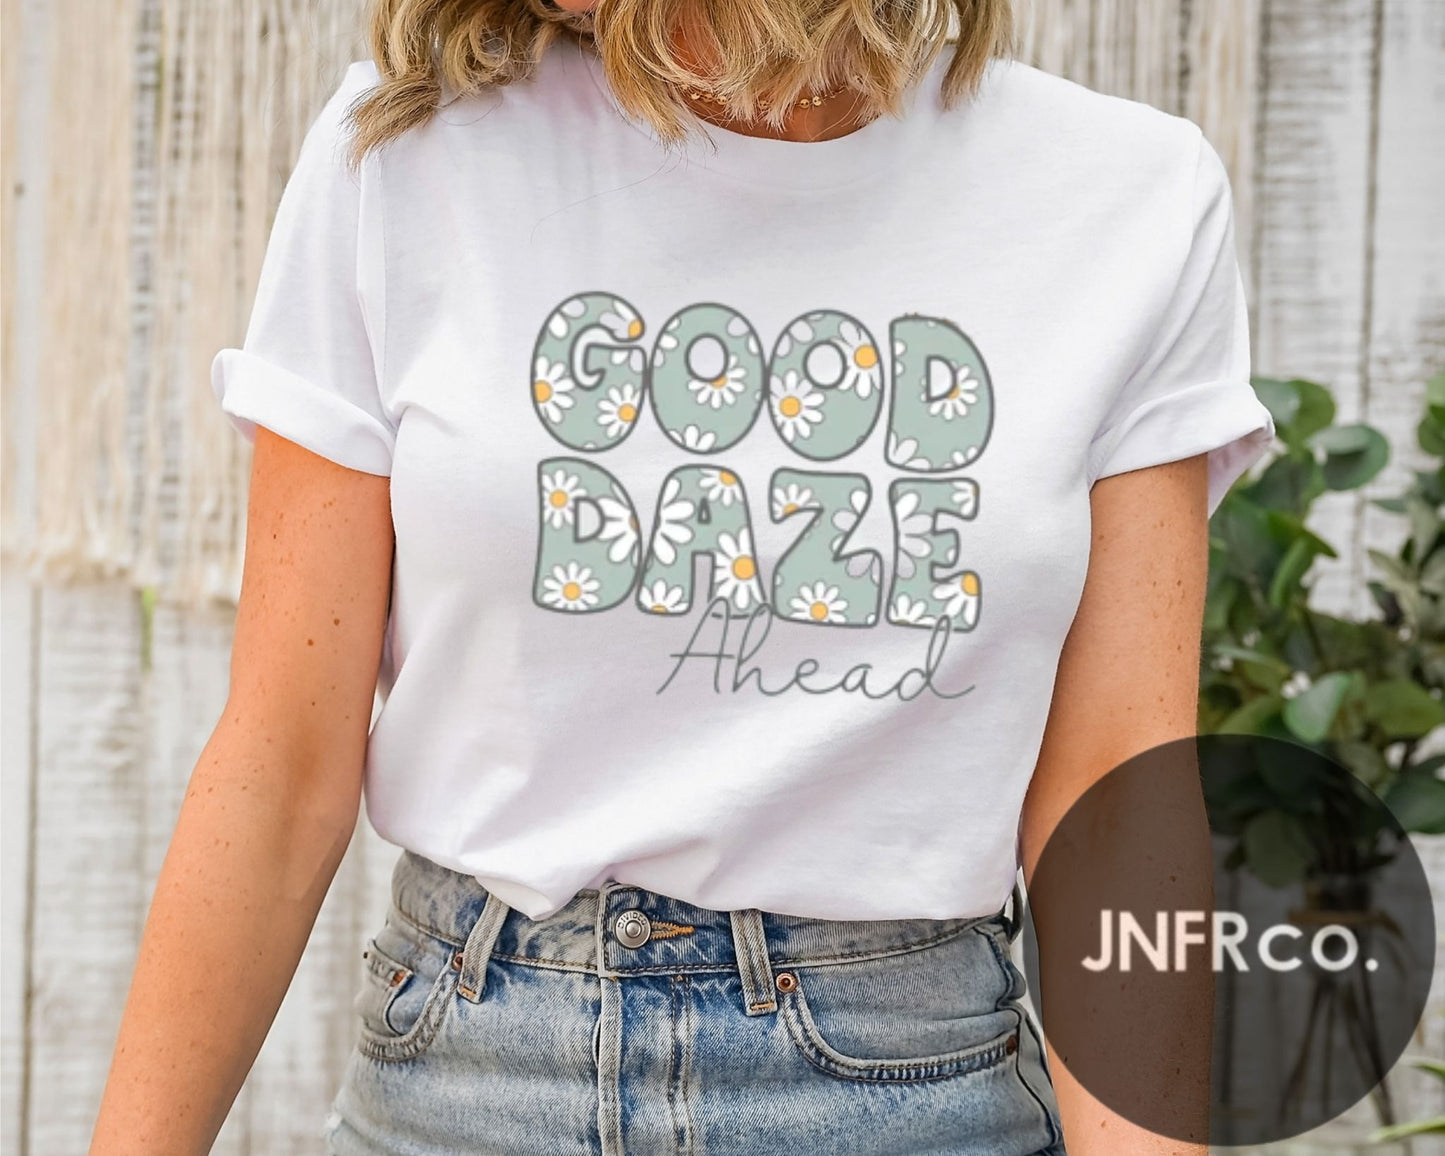 Good Daze Ahead T-Shirt